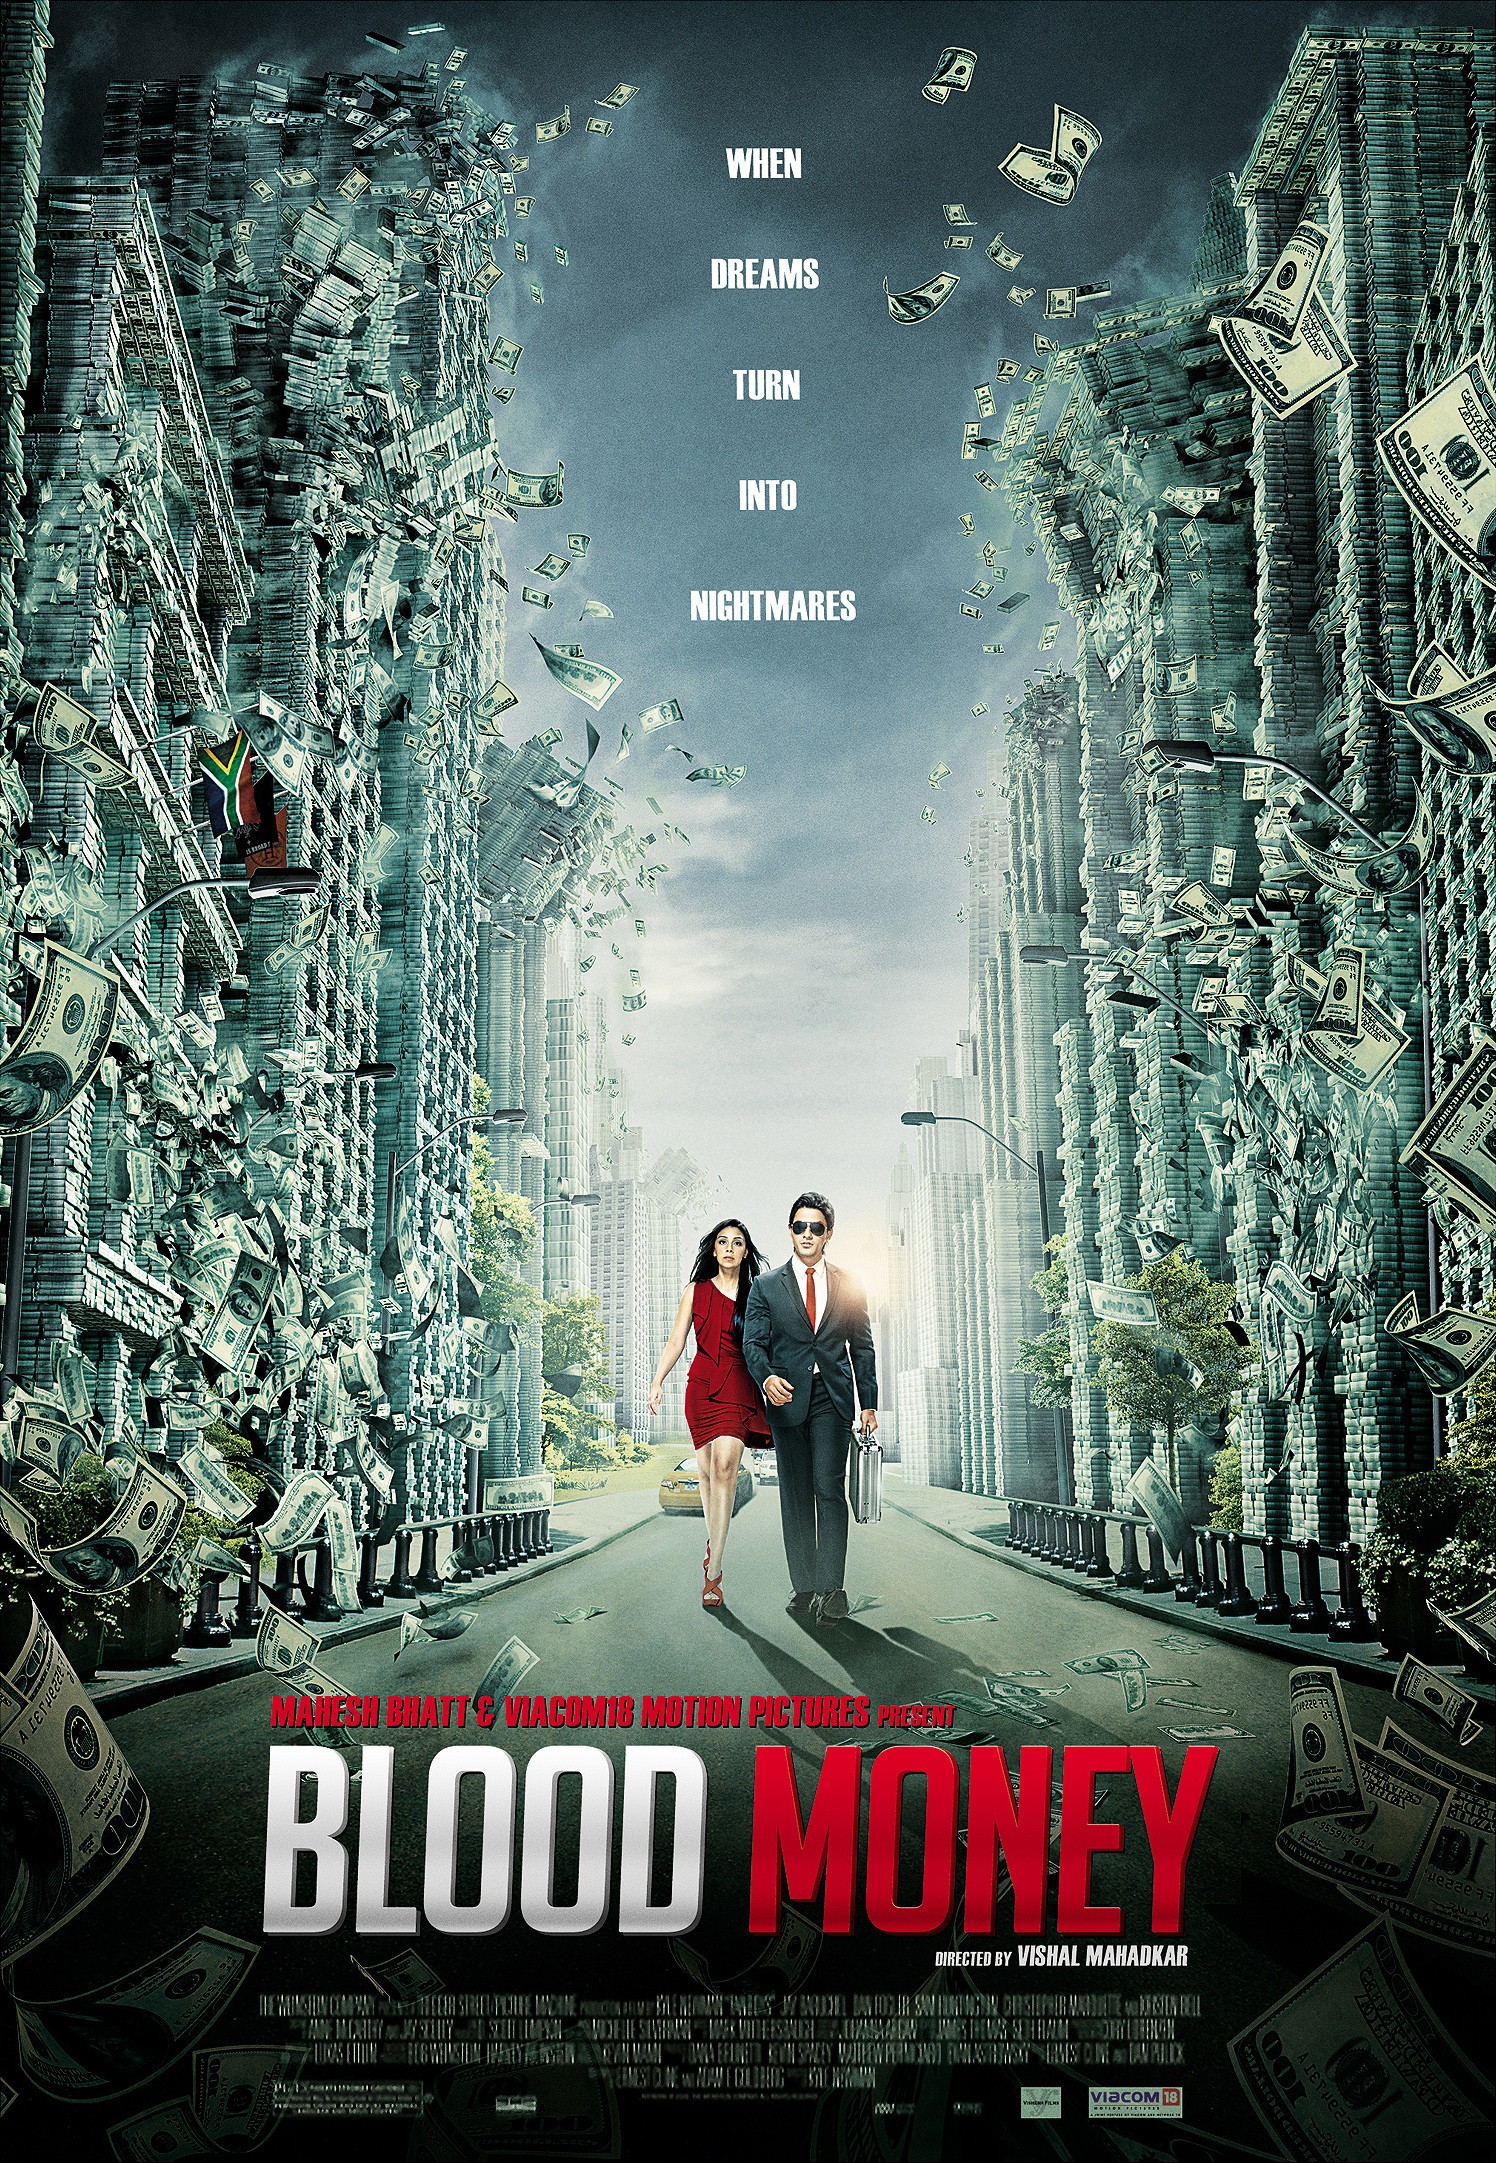 Blood money full movie free download 3gp download